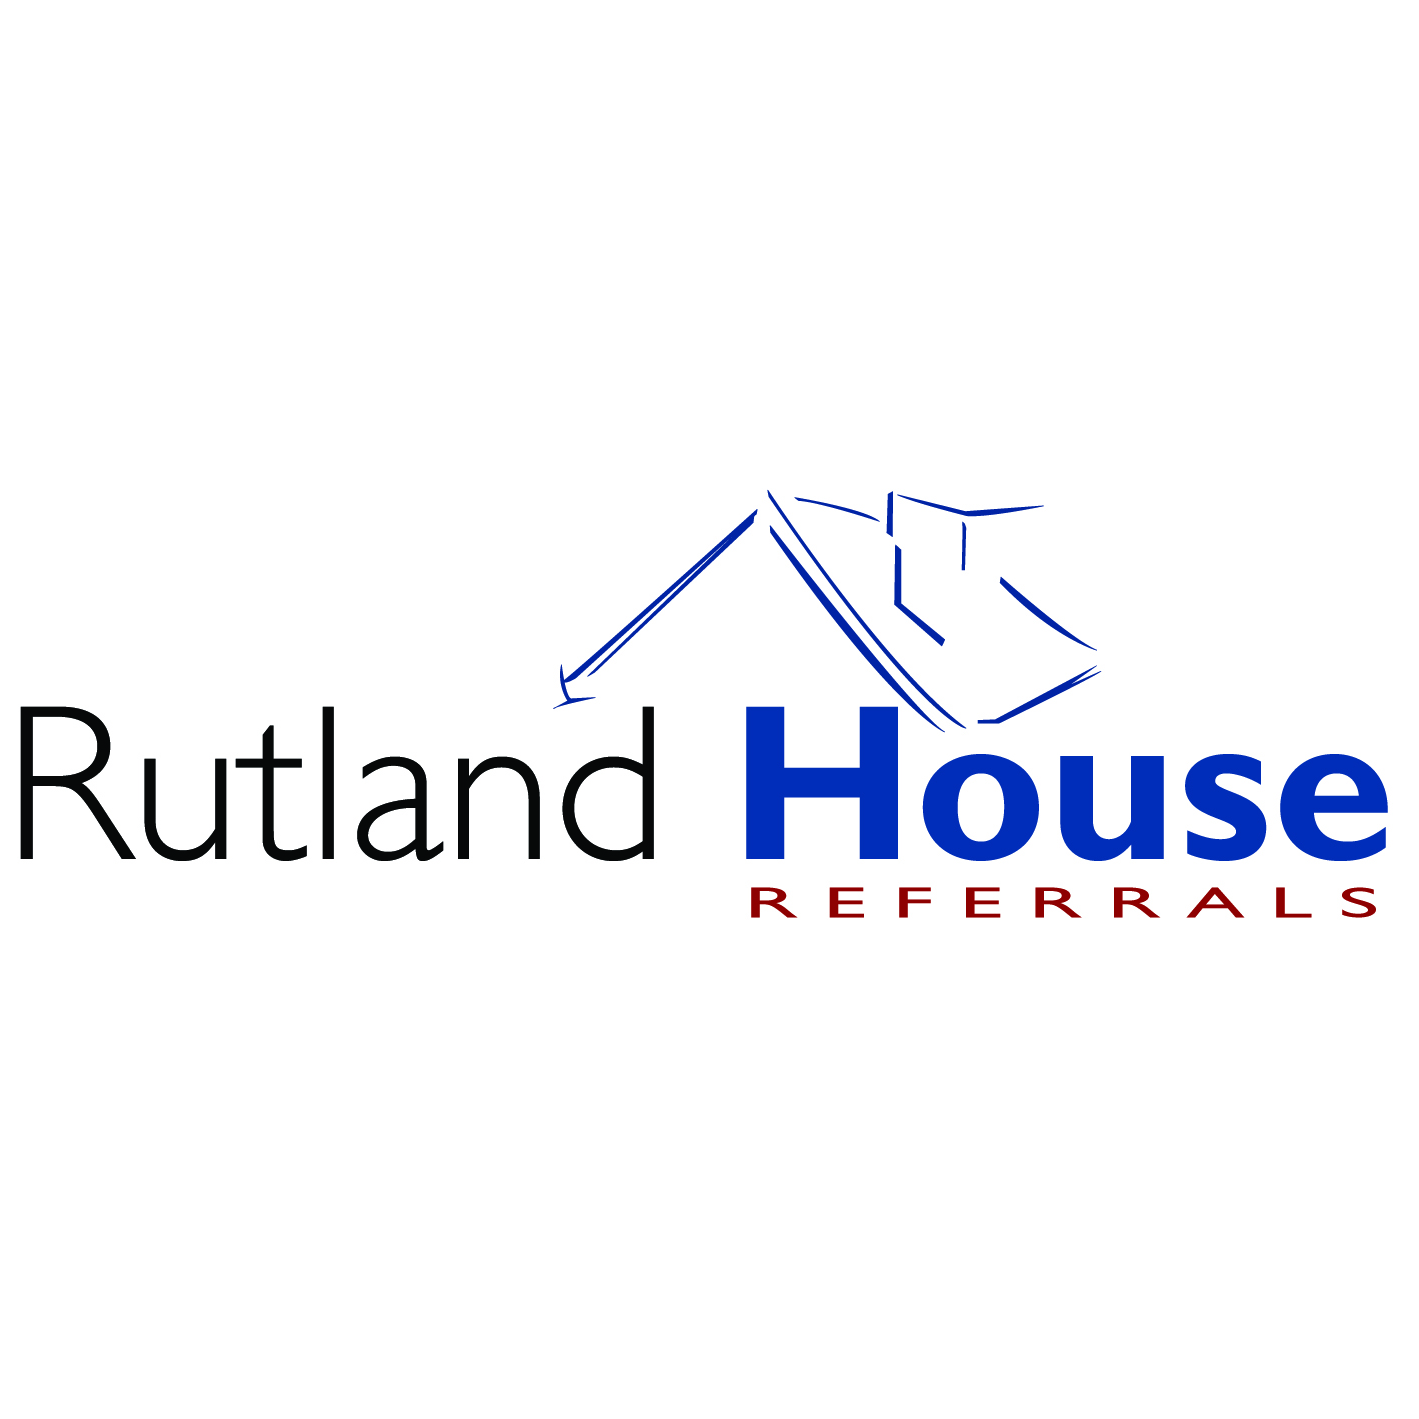 Images Rutland House Referrals